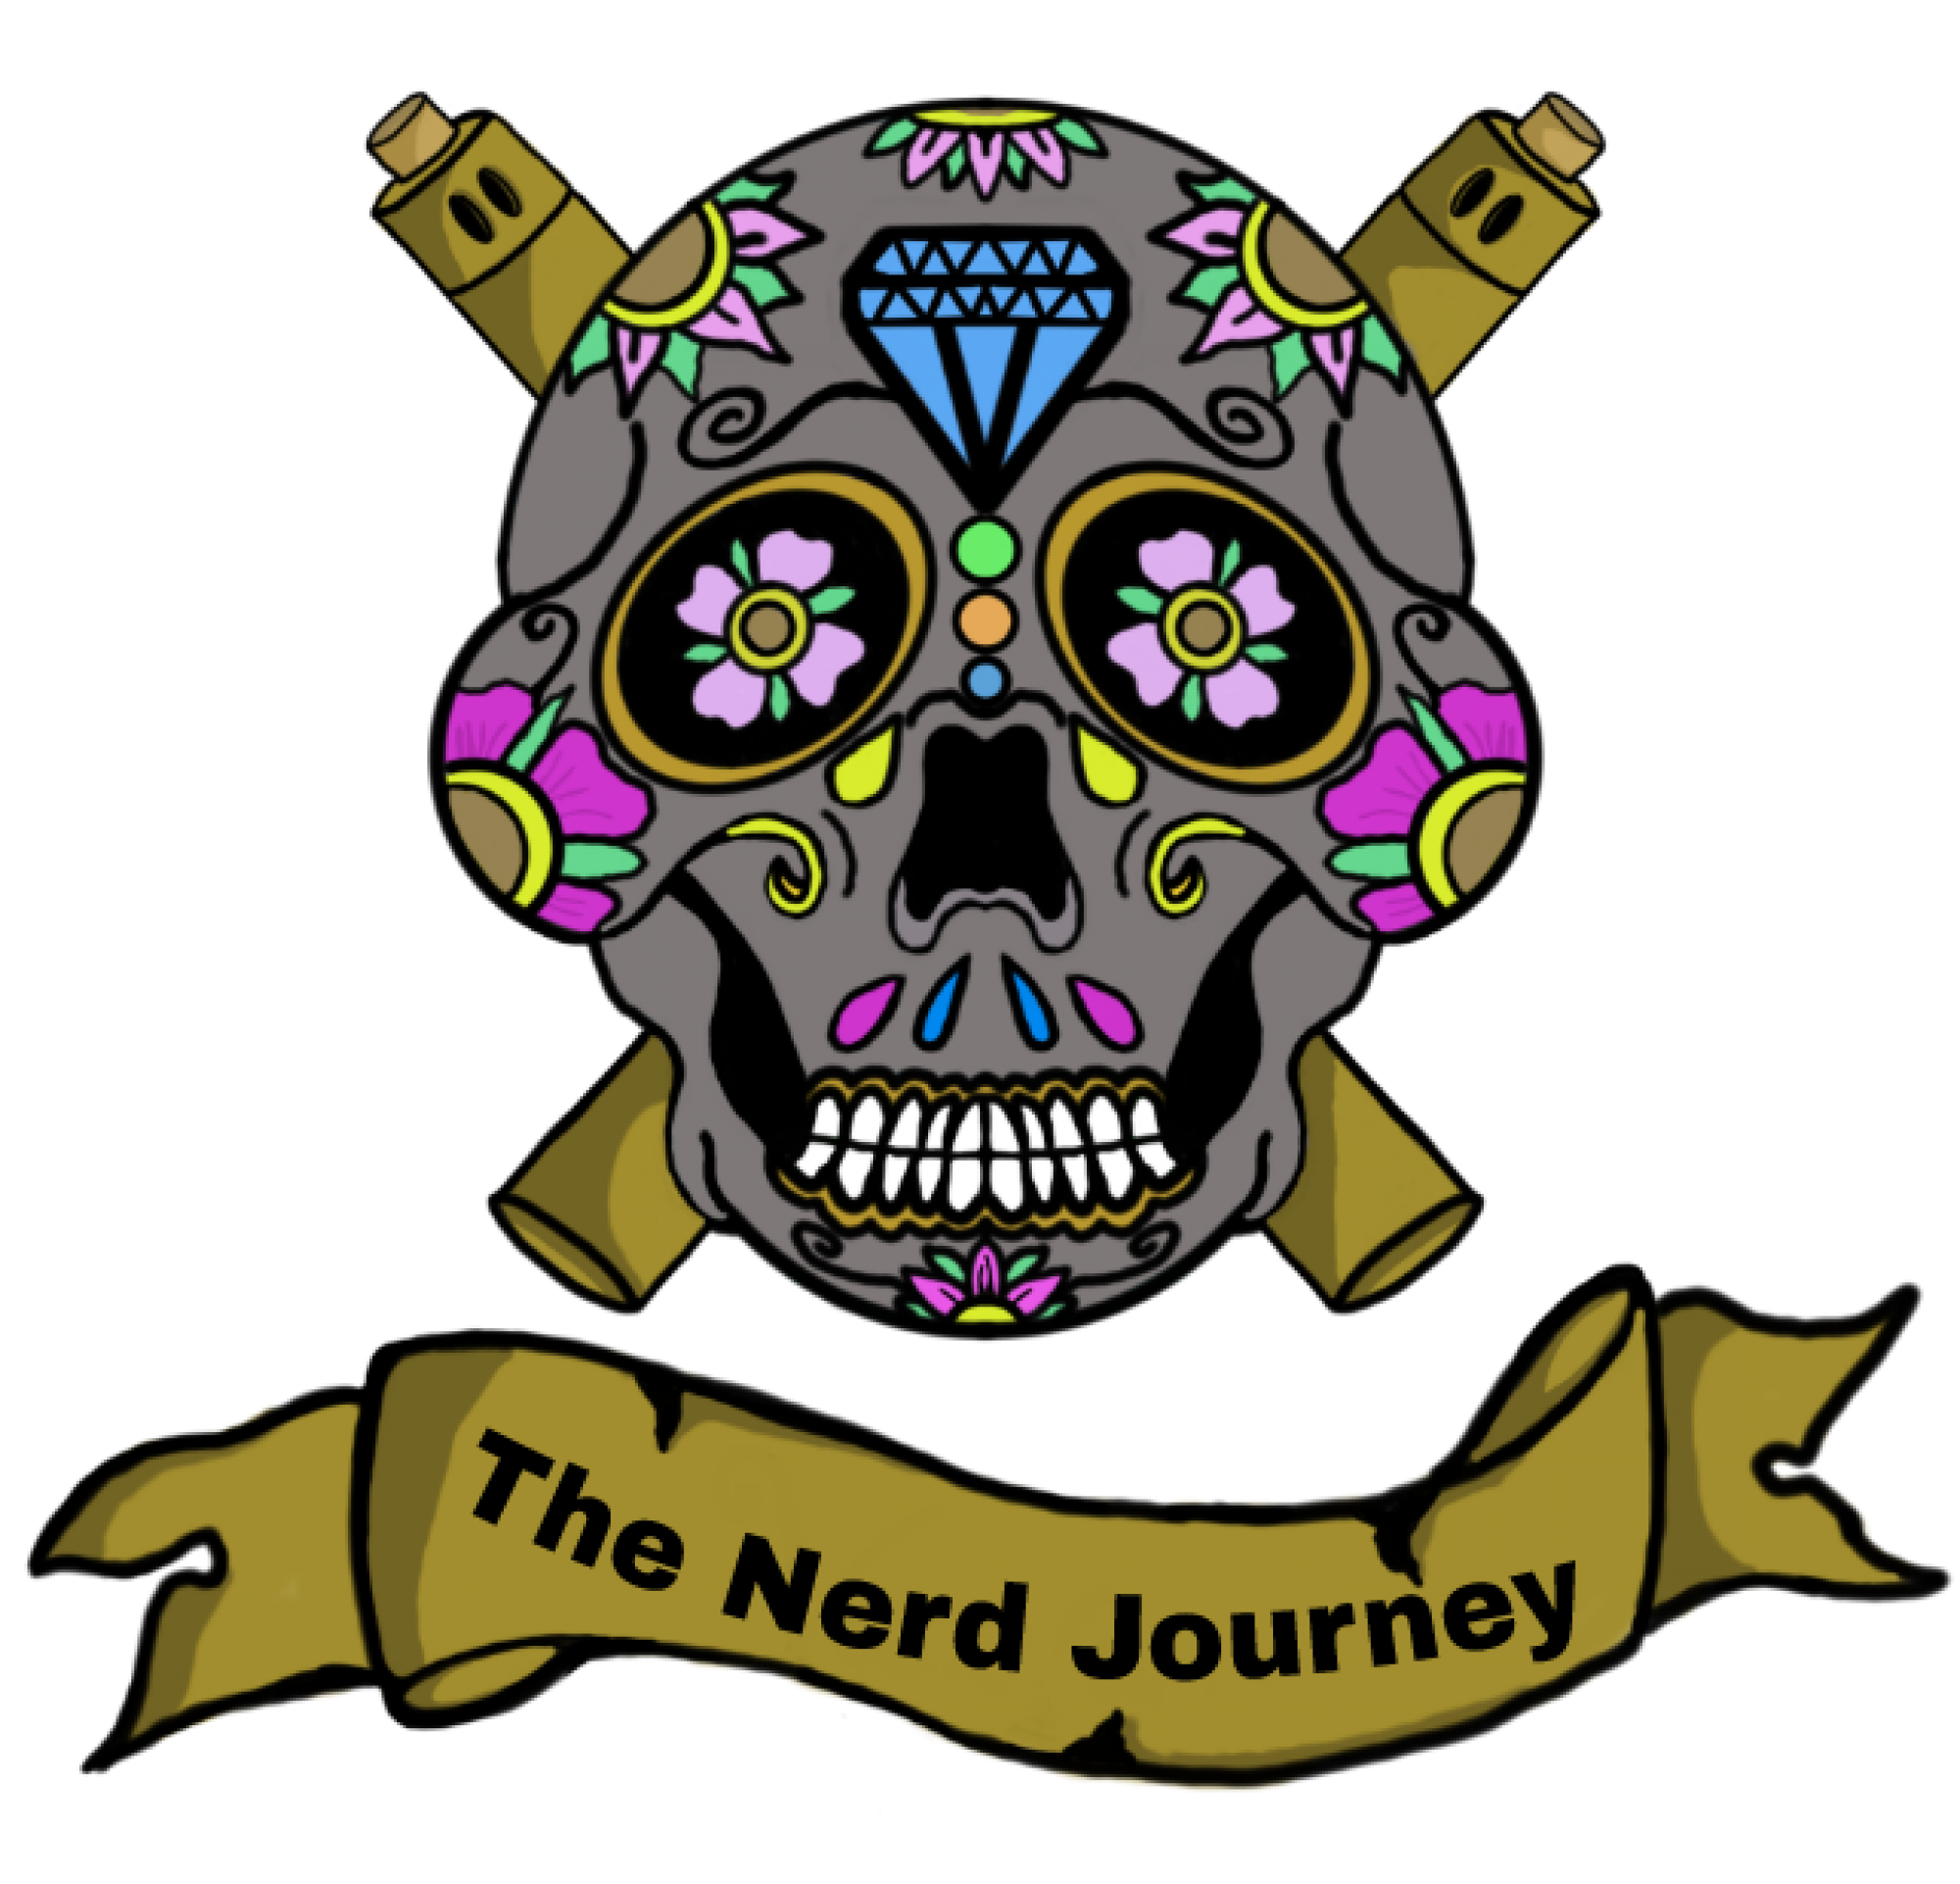 The Nerd Journey